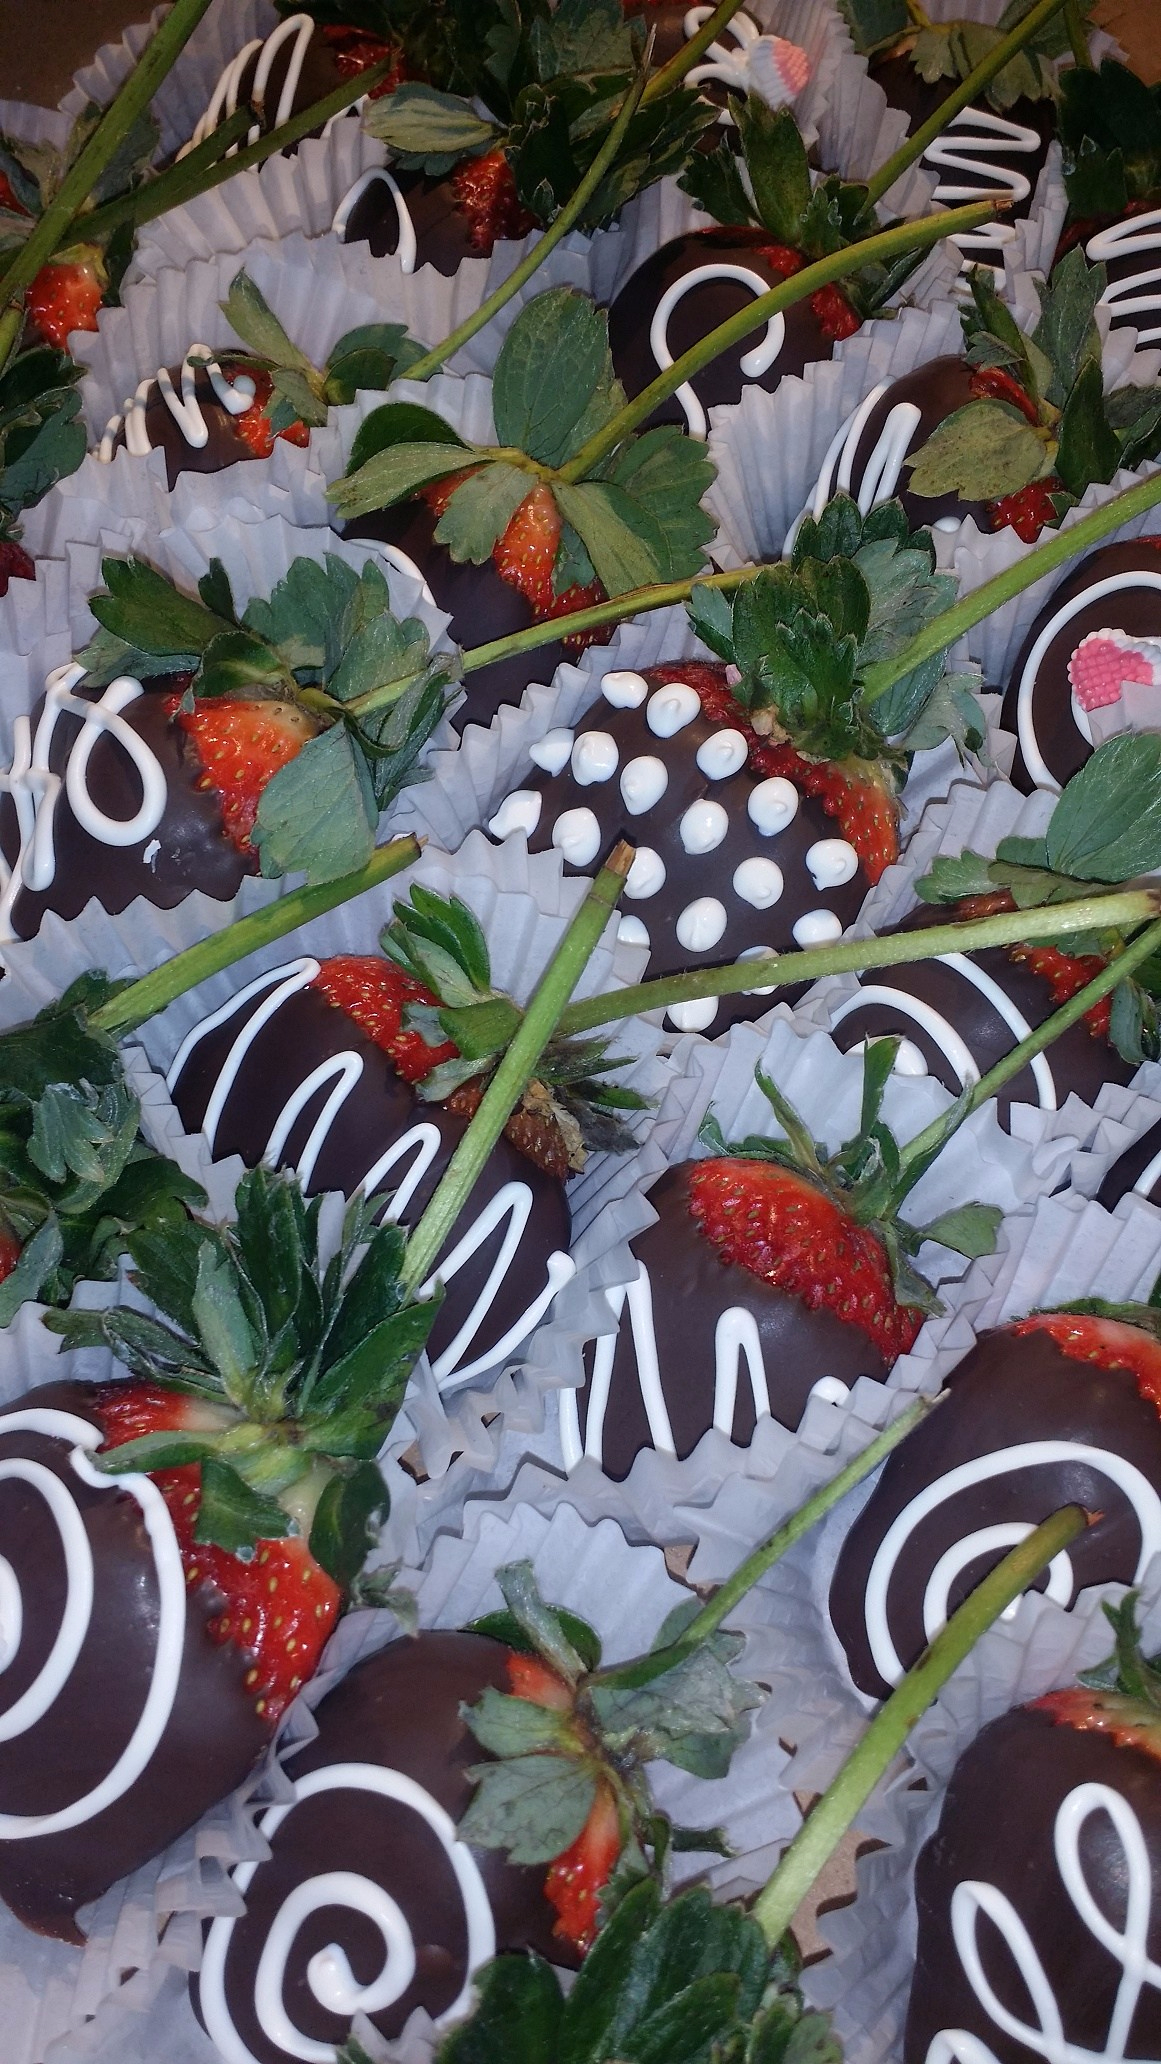 chocolate-dipped-strawberries.jpg